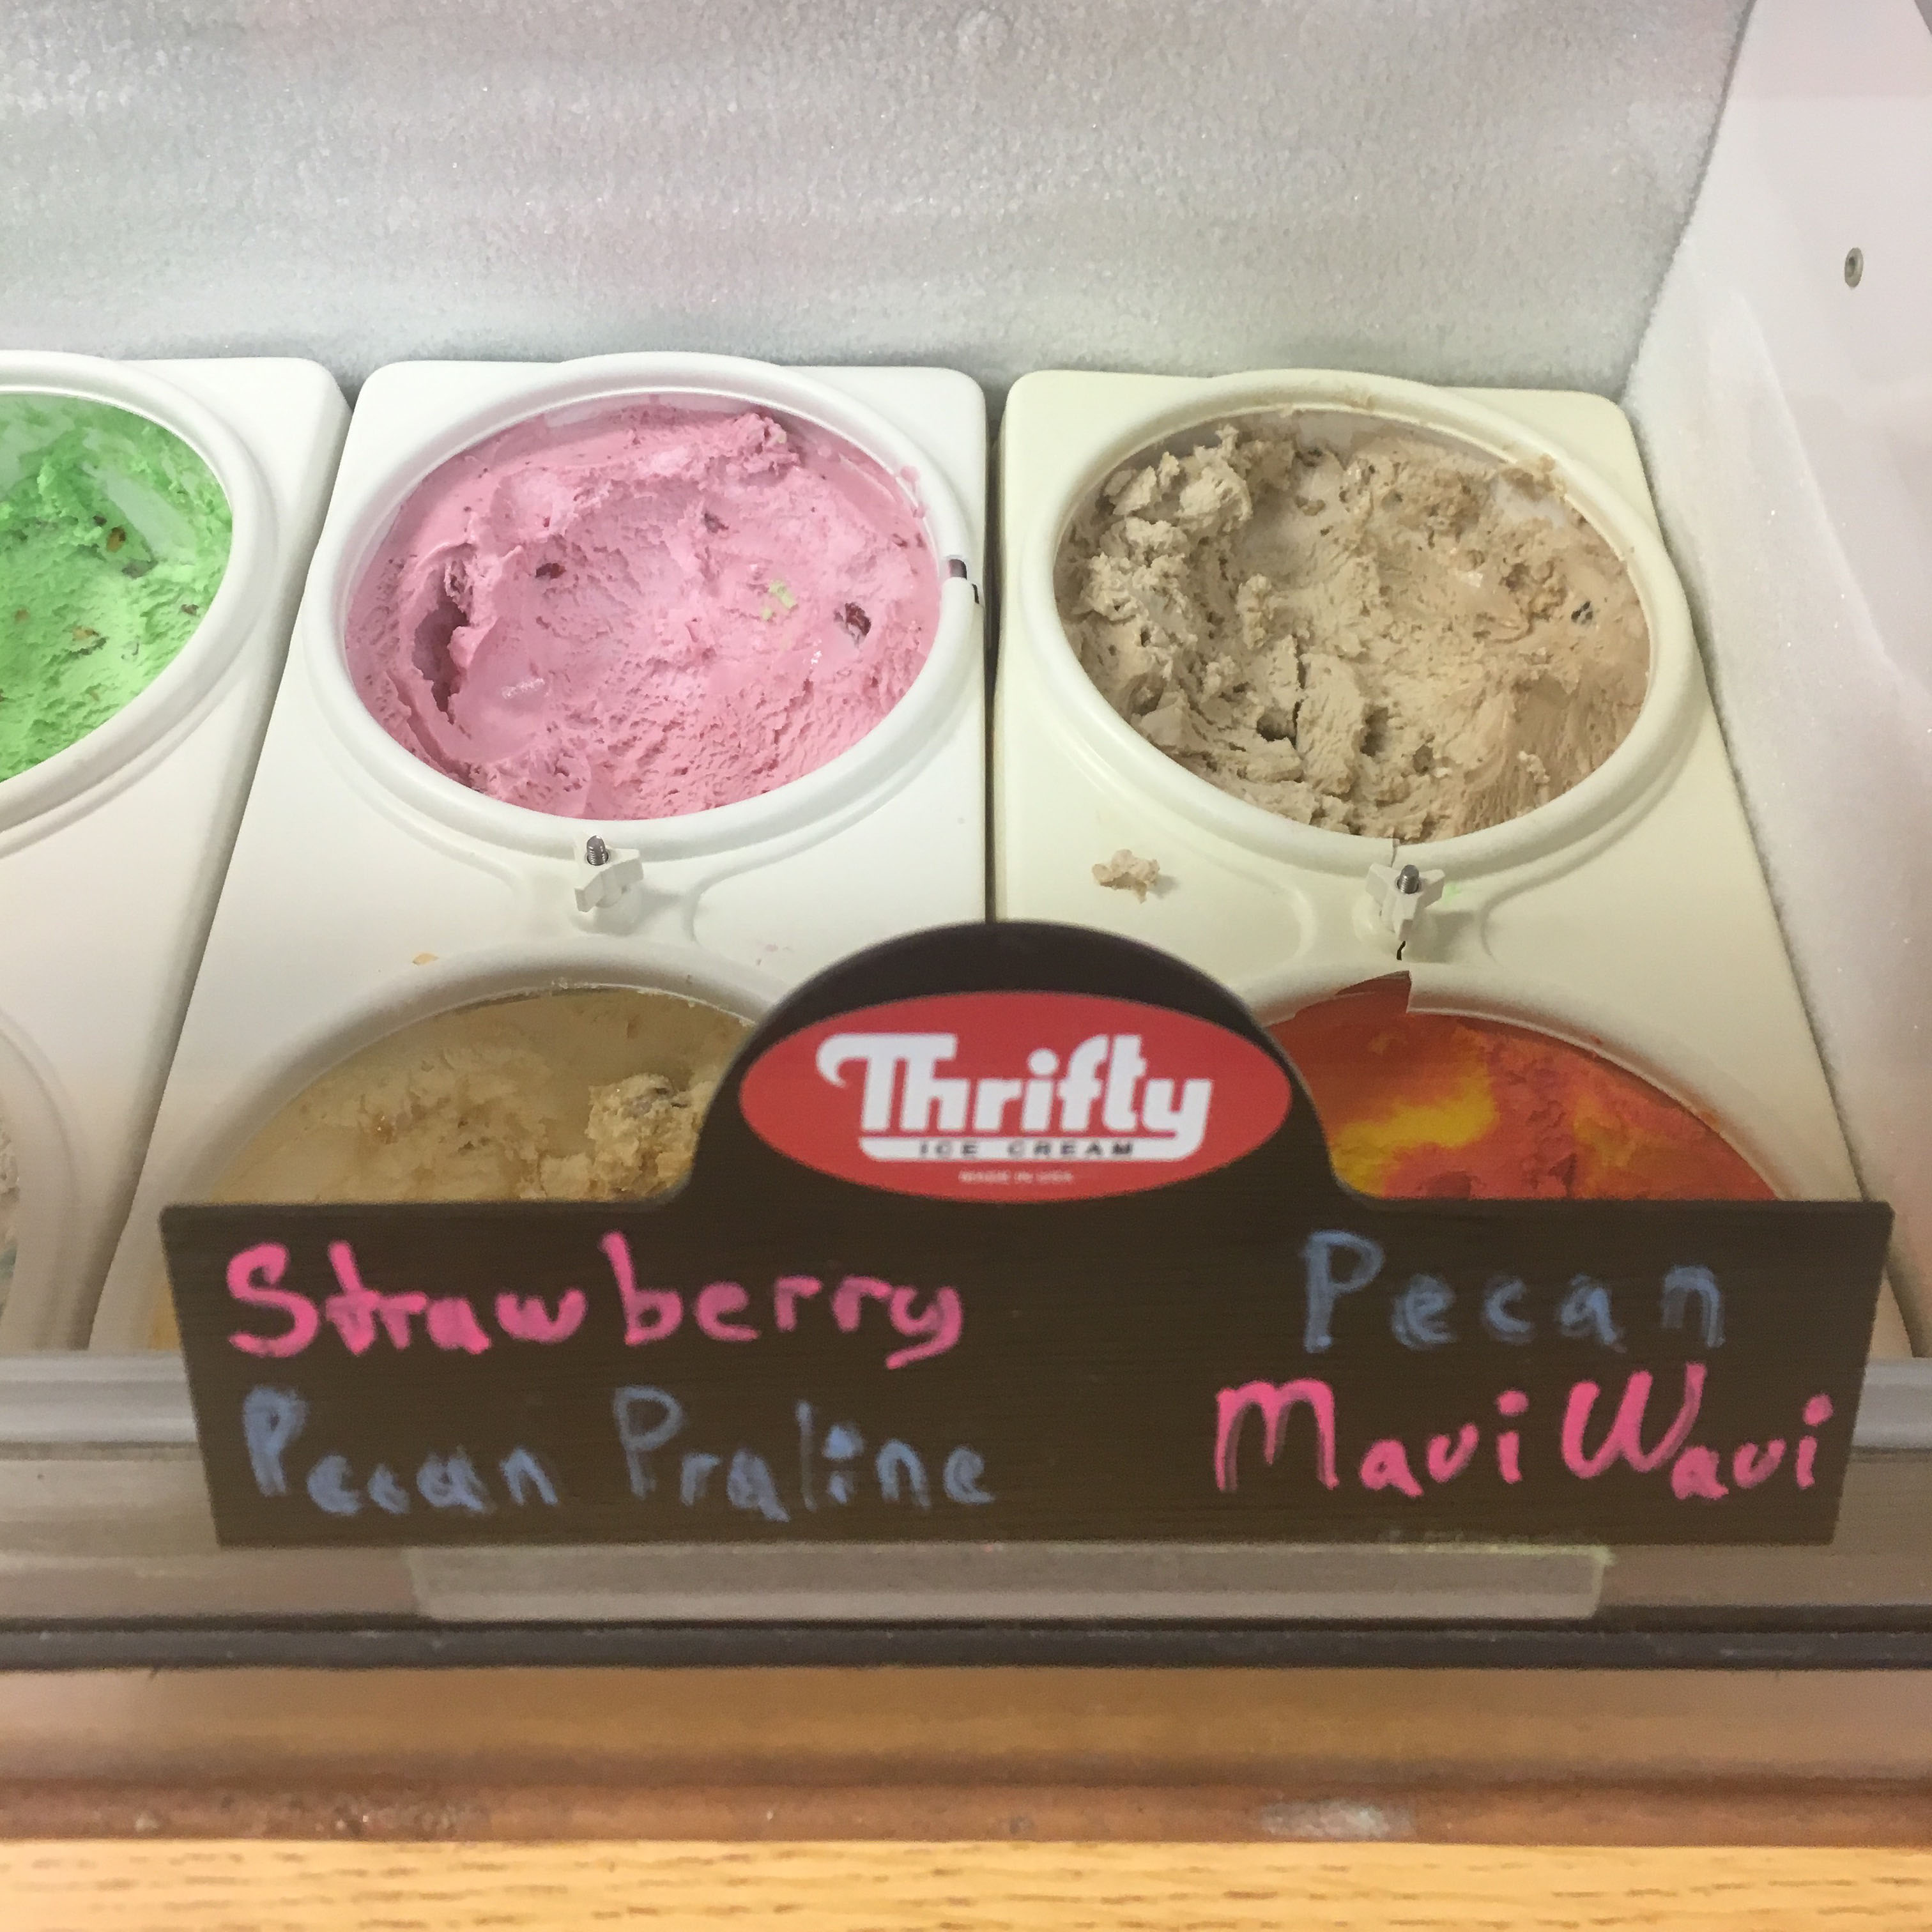 Image of Thrifty ice cream